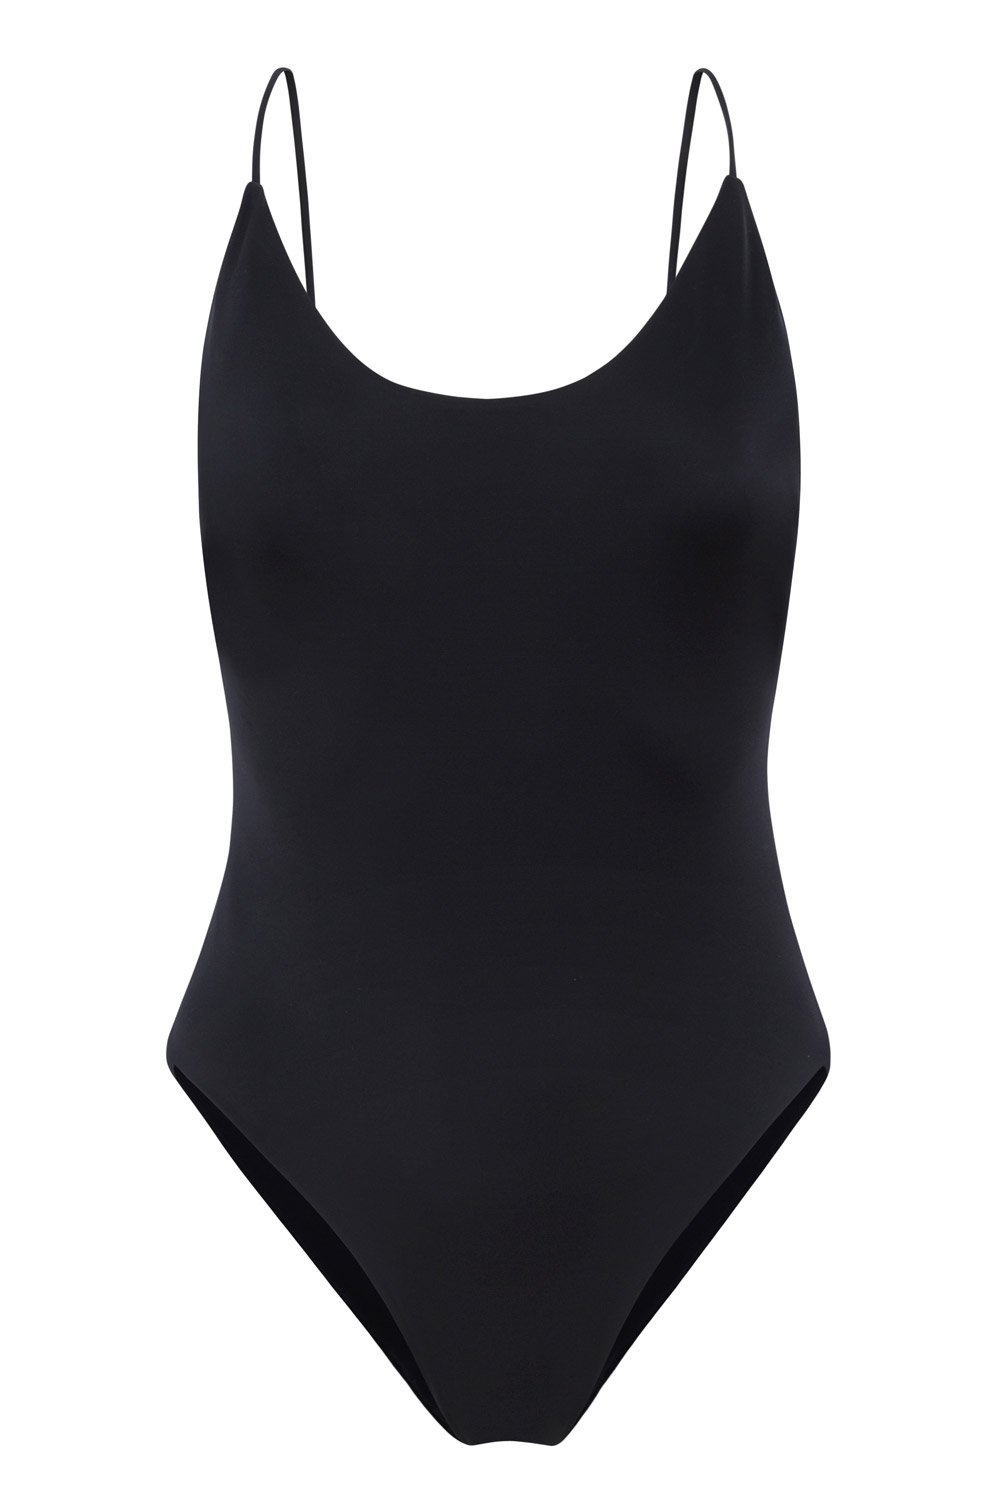 Sustainable Luxury Swimwear / Ropa de baño sostenible, eco swimsuit / bañador ecológico. Alona onepiece in blacksands, by NOW_THEN